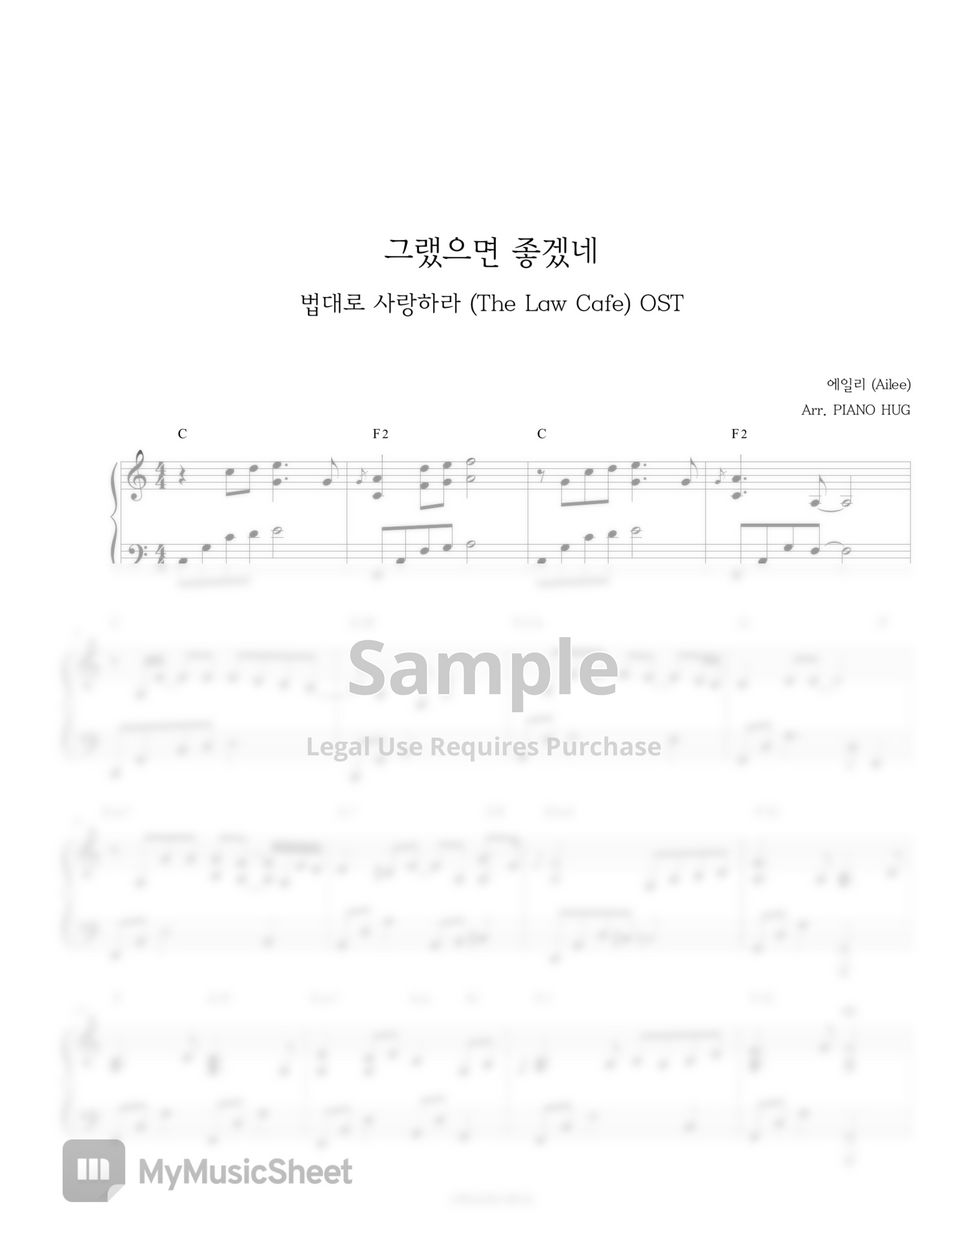 The Law Cafe (법대로 사랑하라) OST - Ailee (에일리) - 그랬으면 좋겠네 by Piano Hug